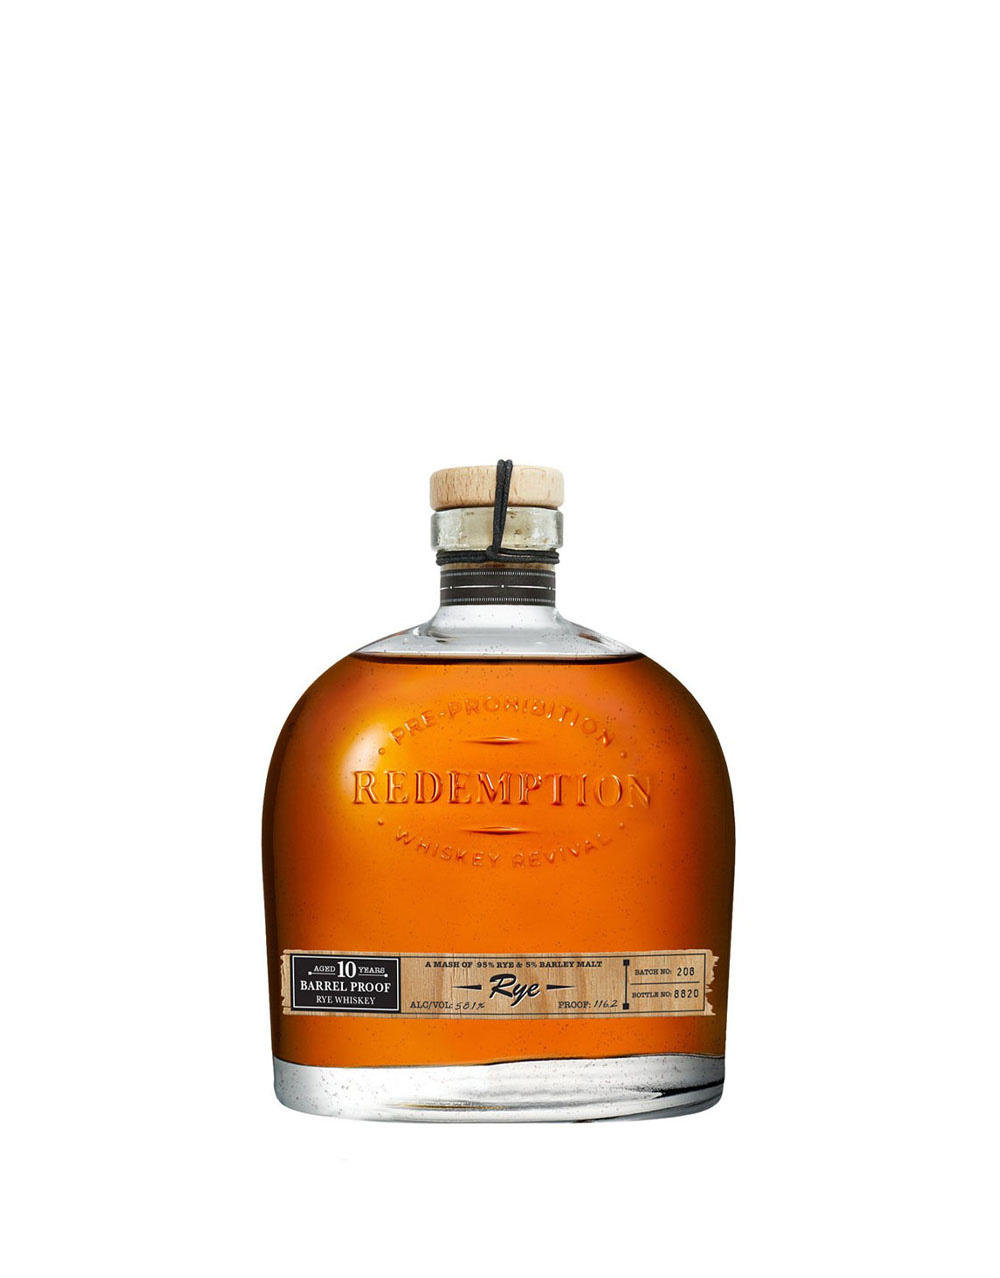 Glen Grant Major's Reserve Single Malt Scotch Whisky